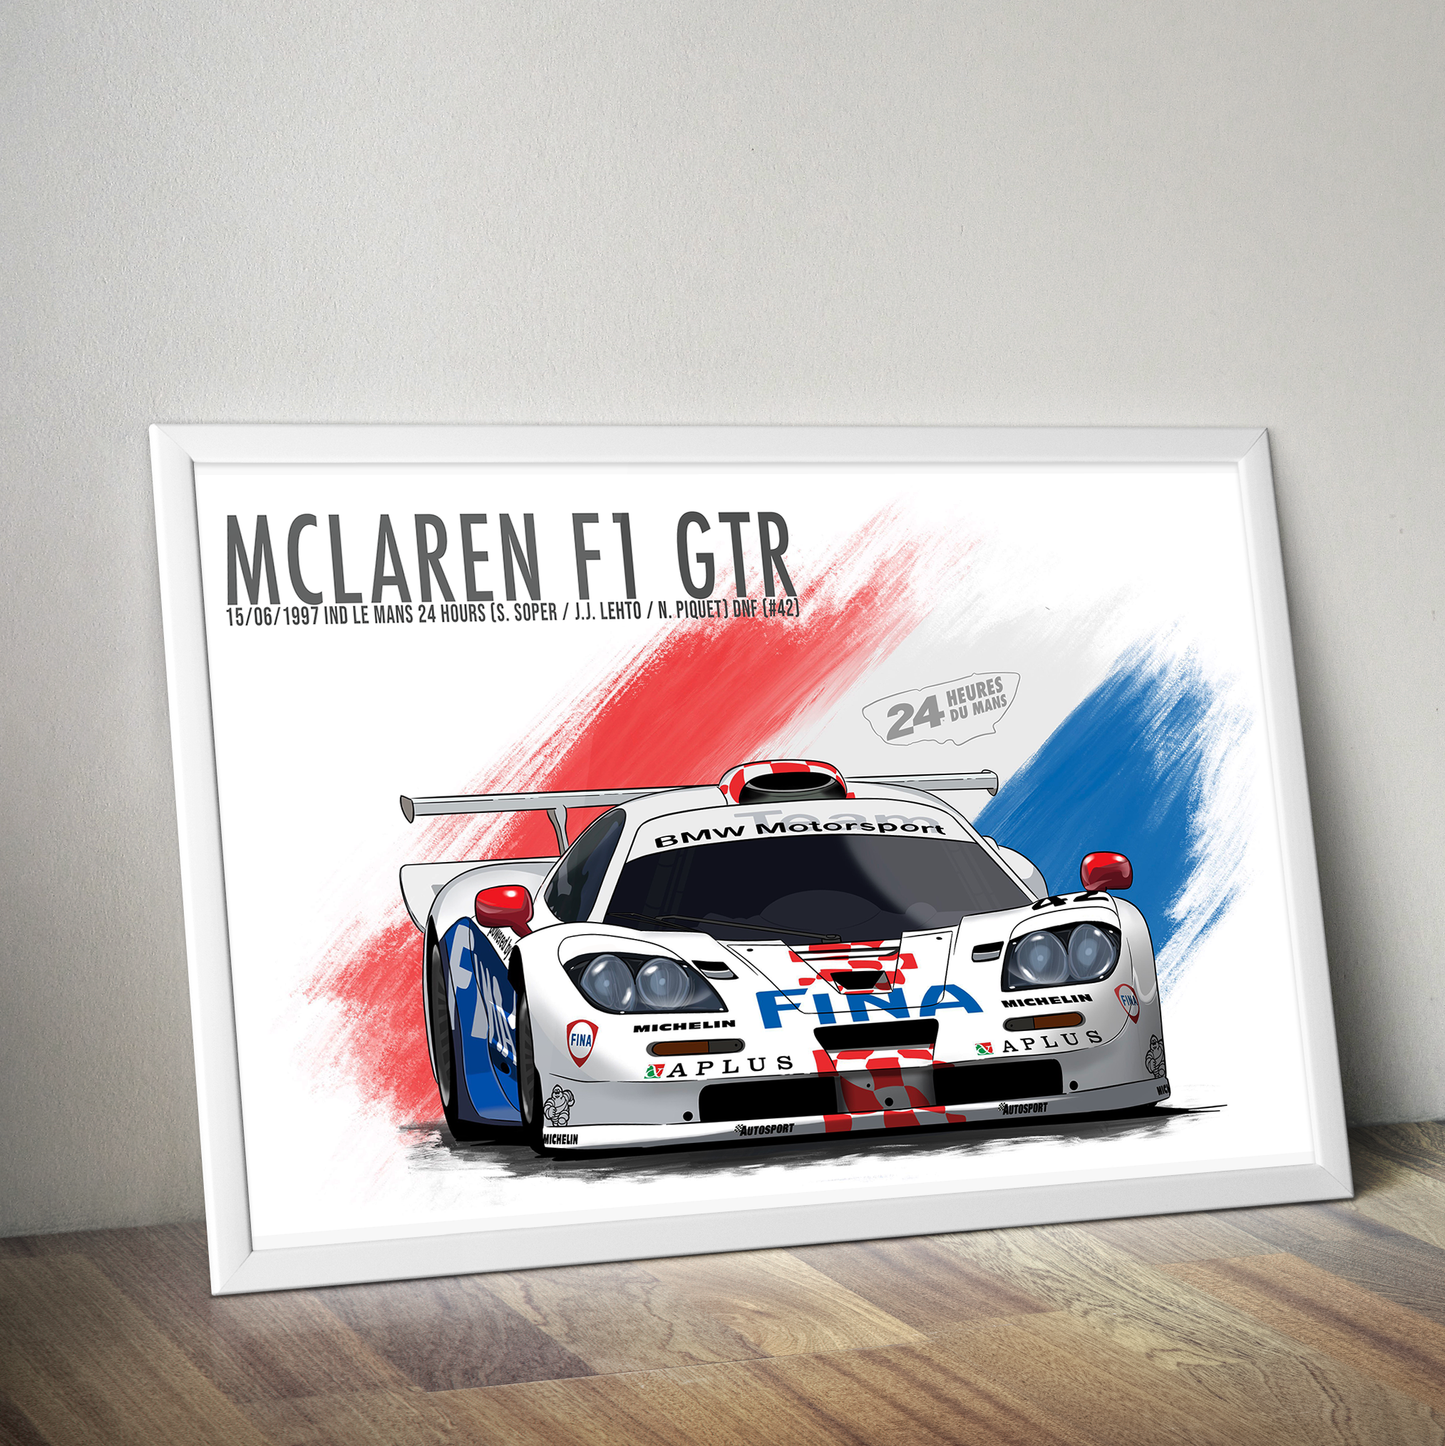 Mclaren F1 GTR 1997 24 Hours of Le Mans poster